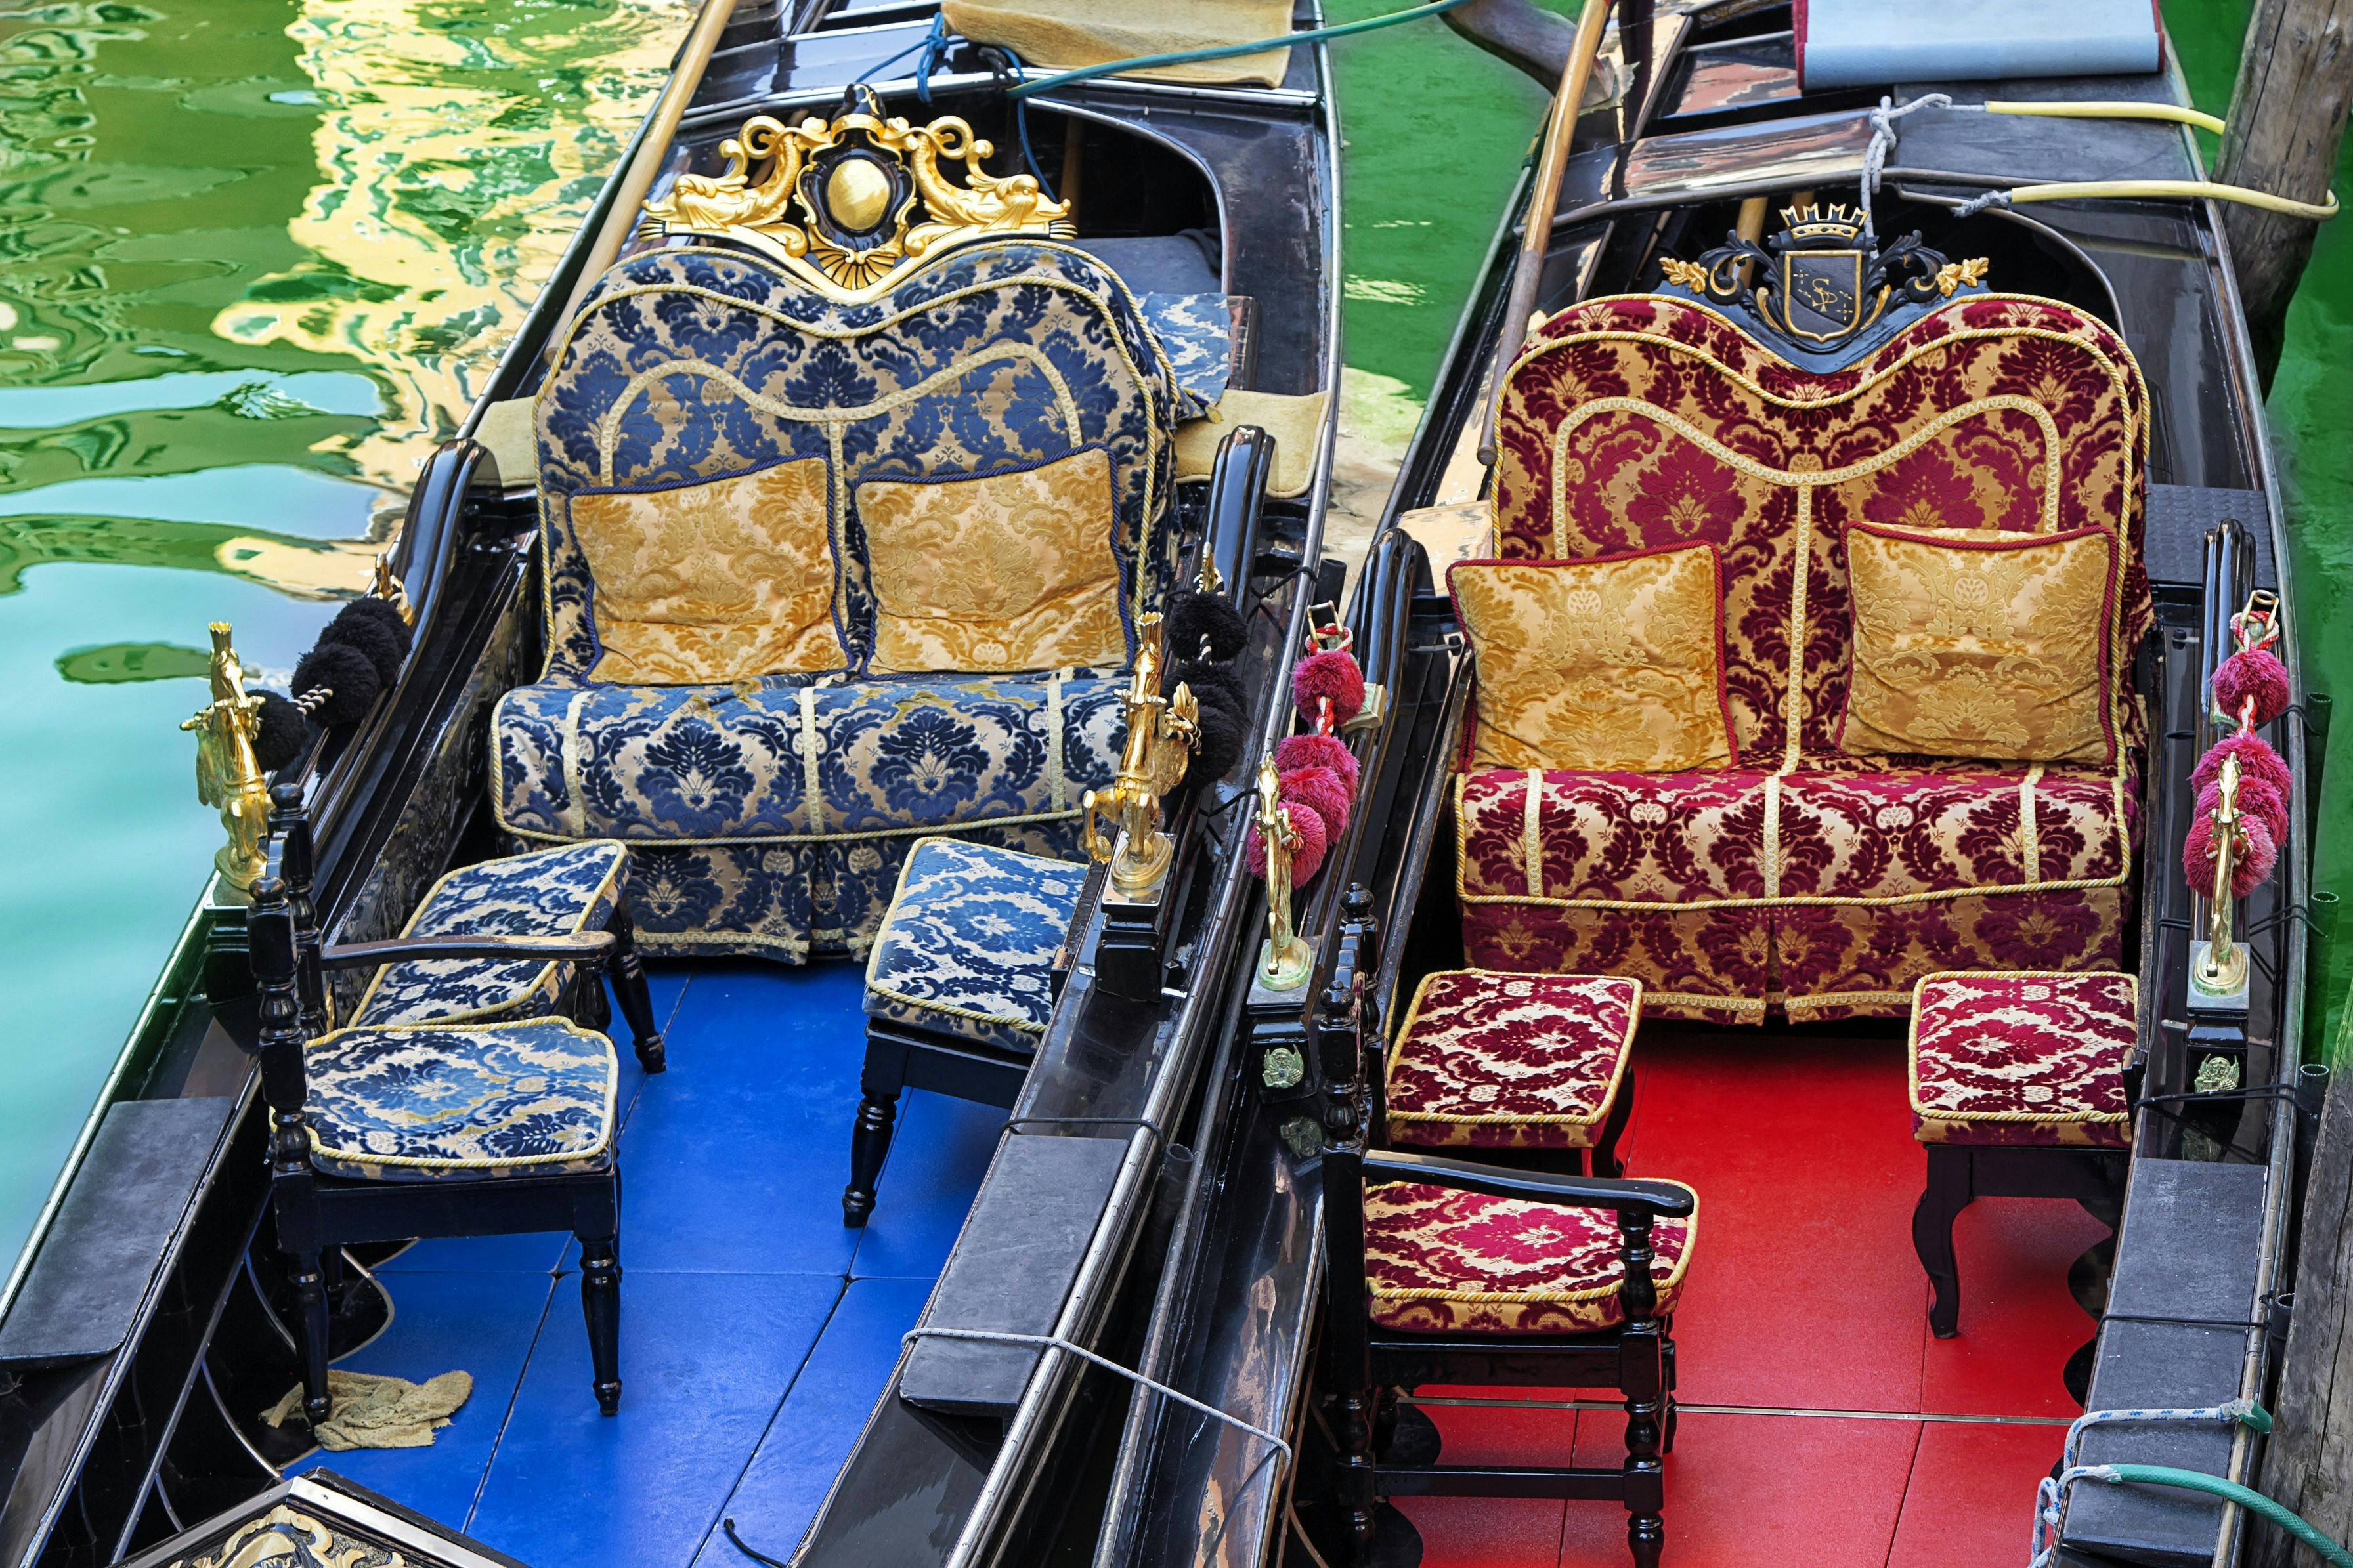 luxurious interior of the gondola in Venice. Italy_Fotolia.jpg